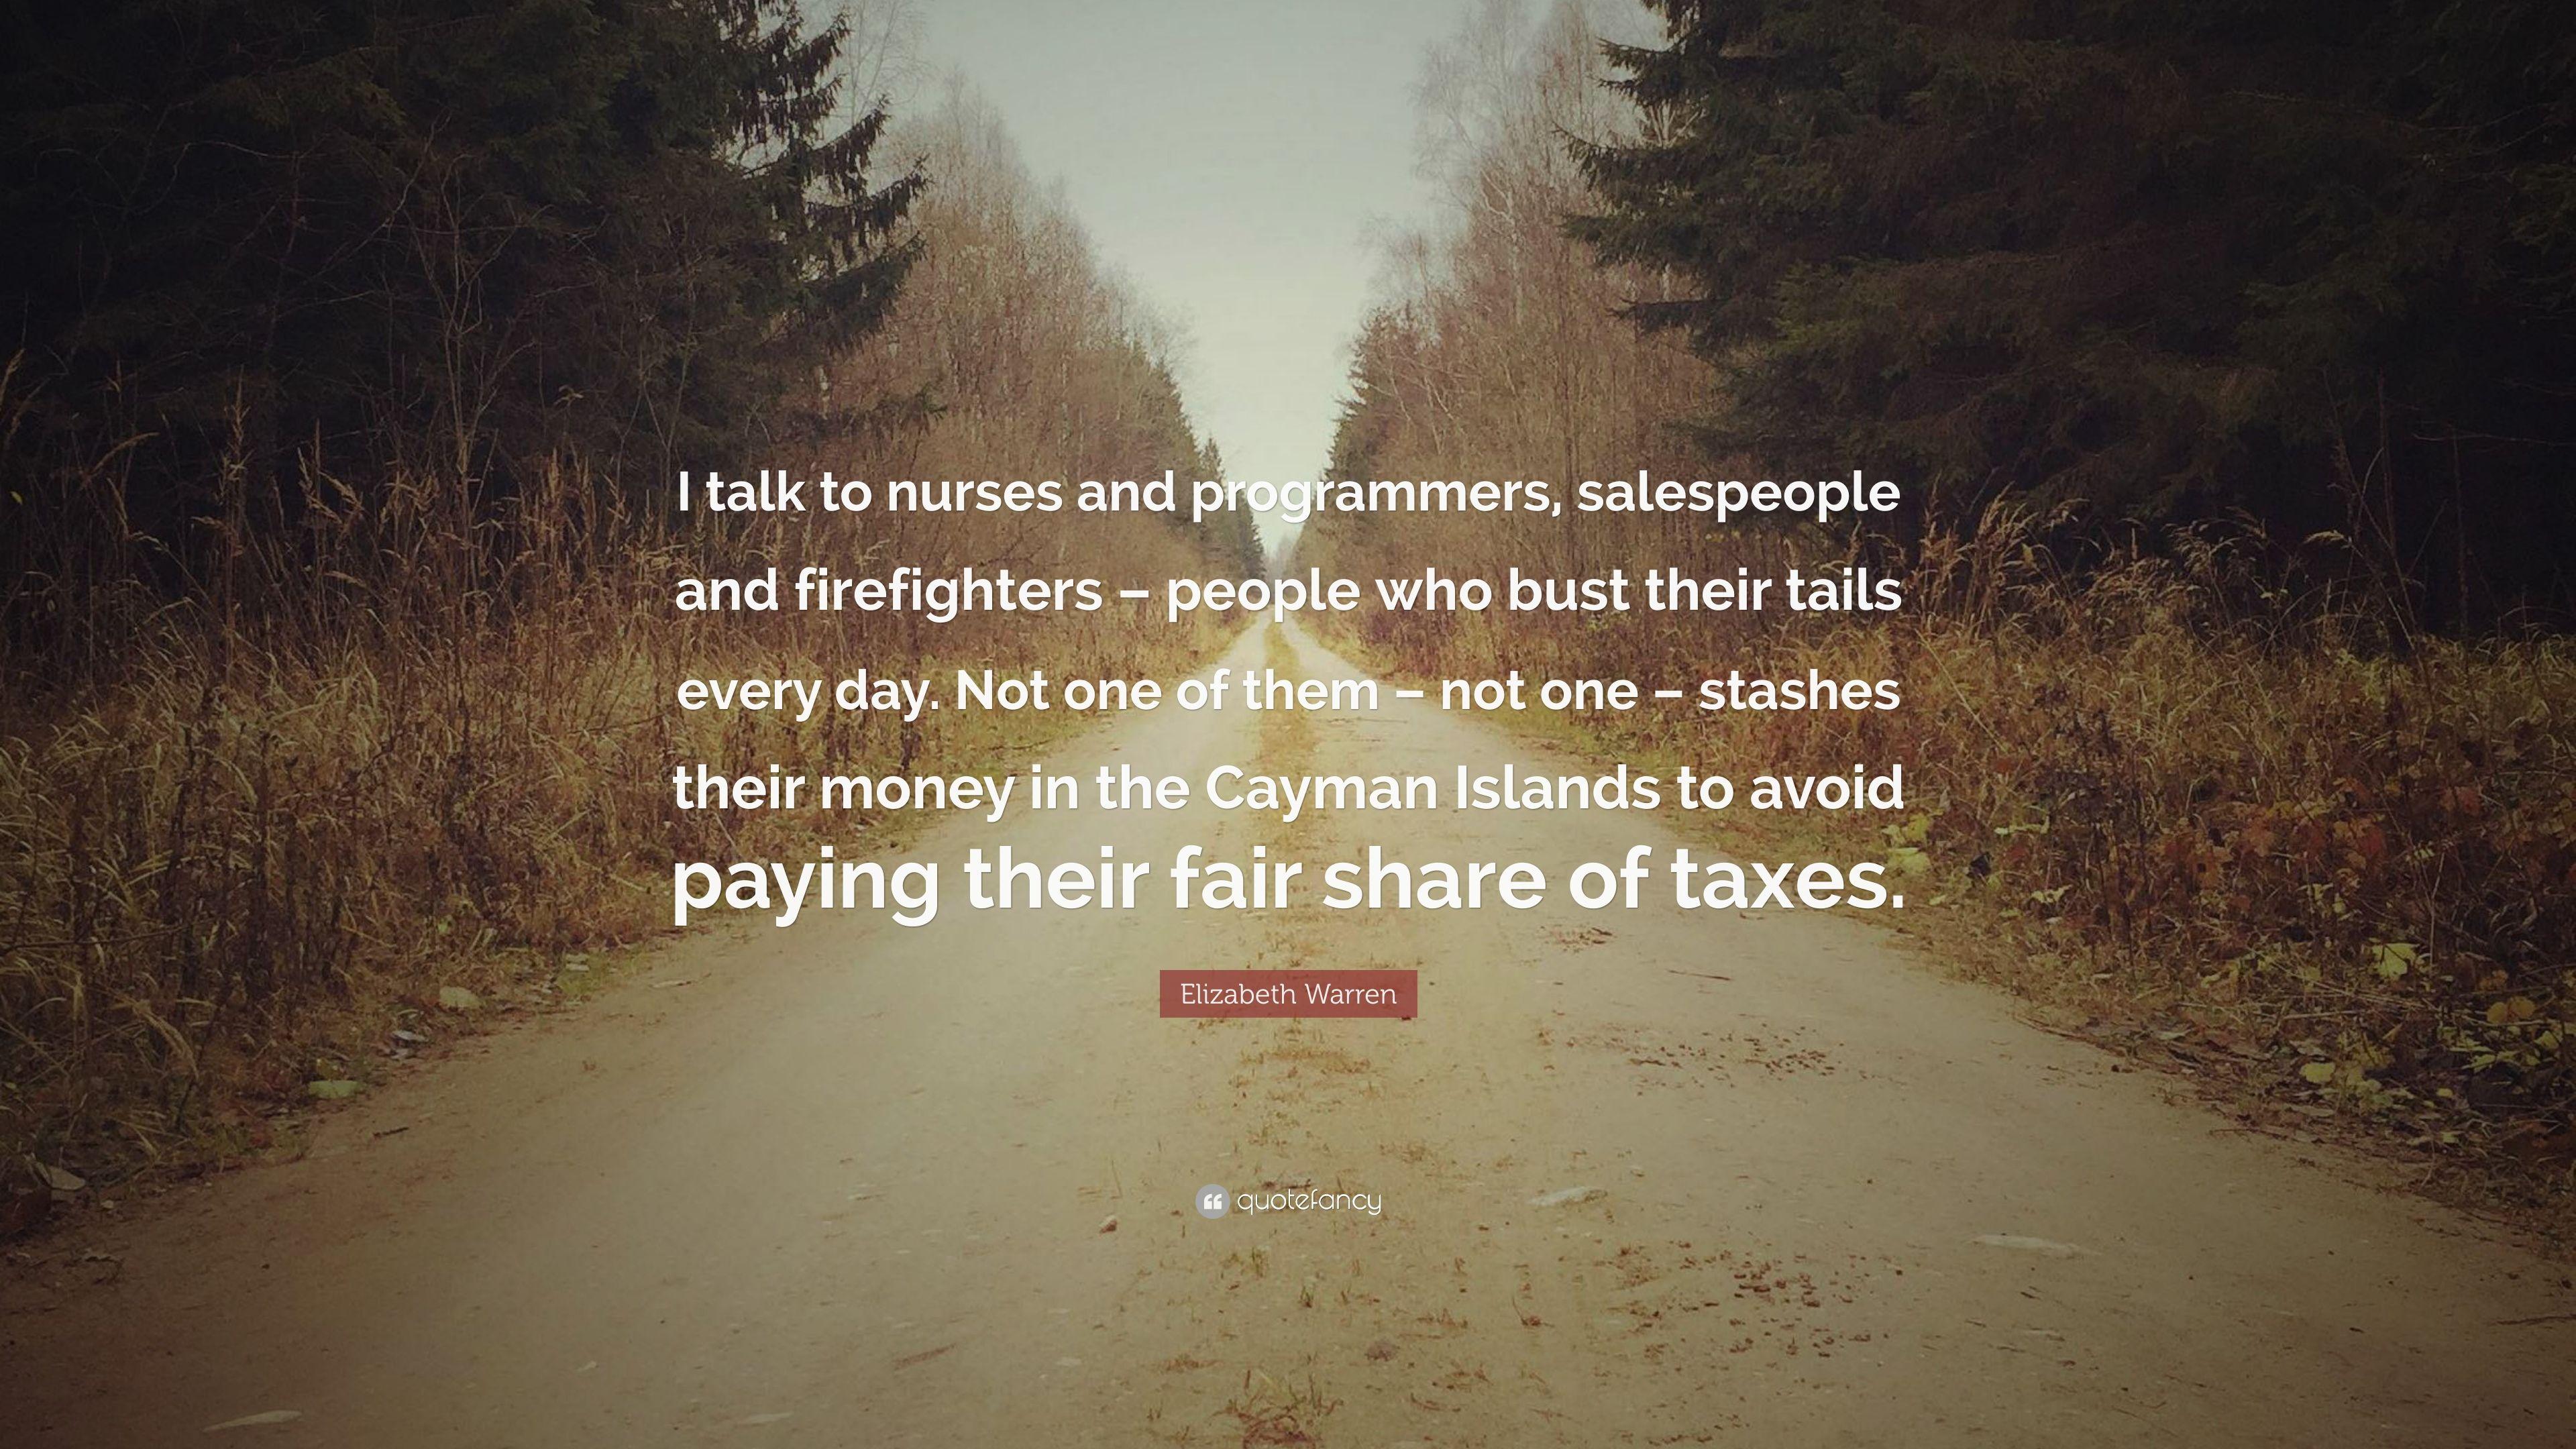 Elizabeth Warren Quote: “I talk to nurses and programmers